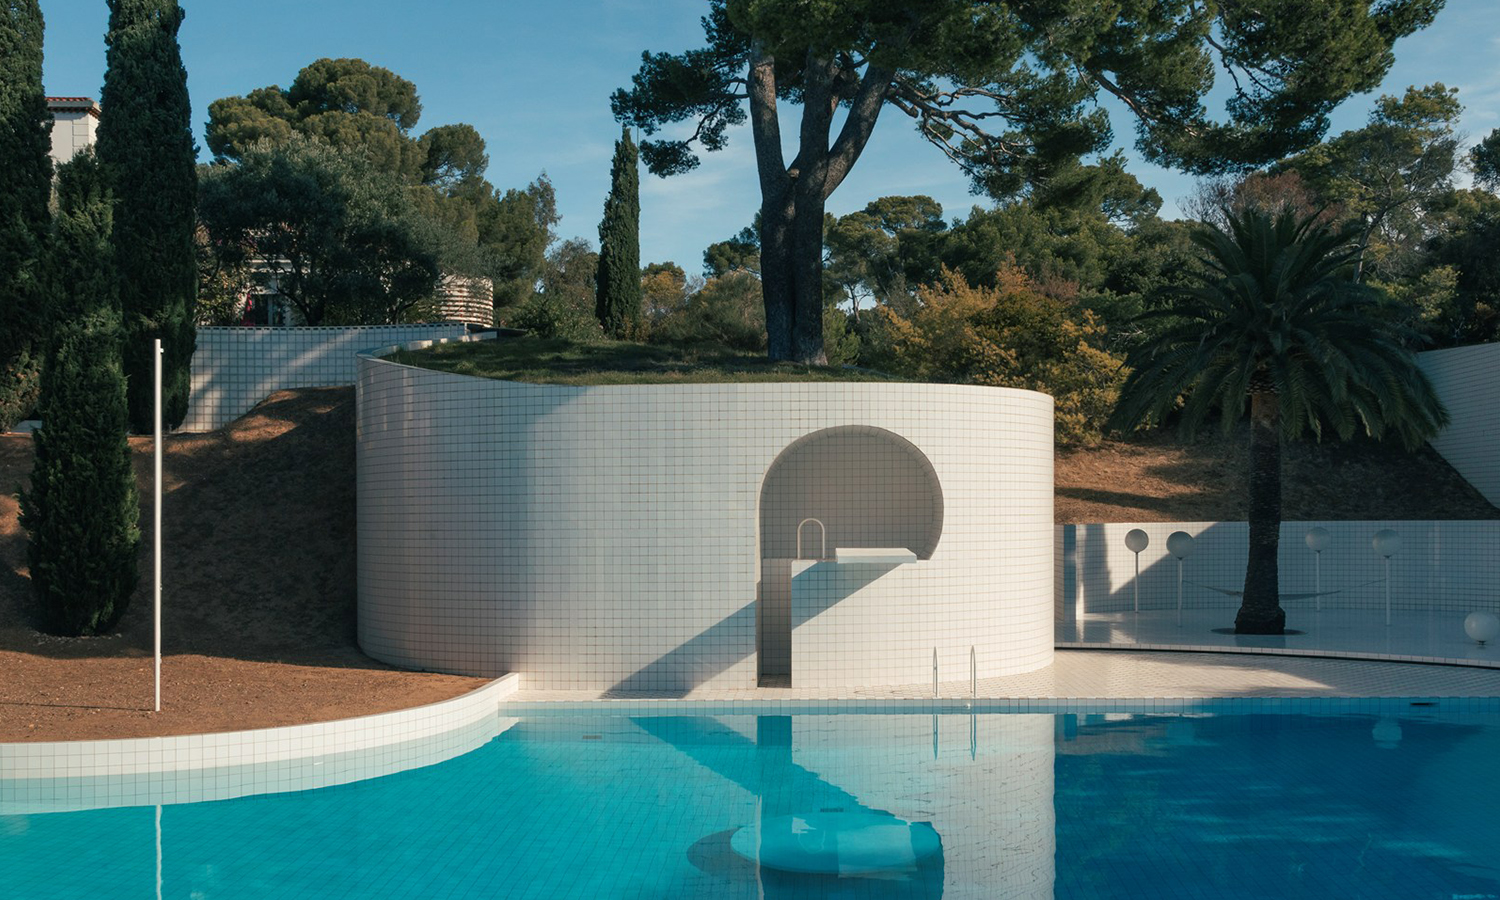 Detalle de la piscina de Alain Capeillères